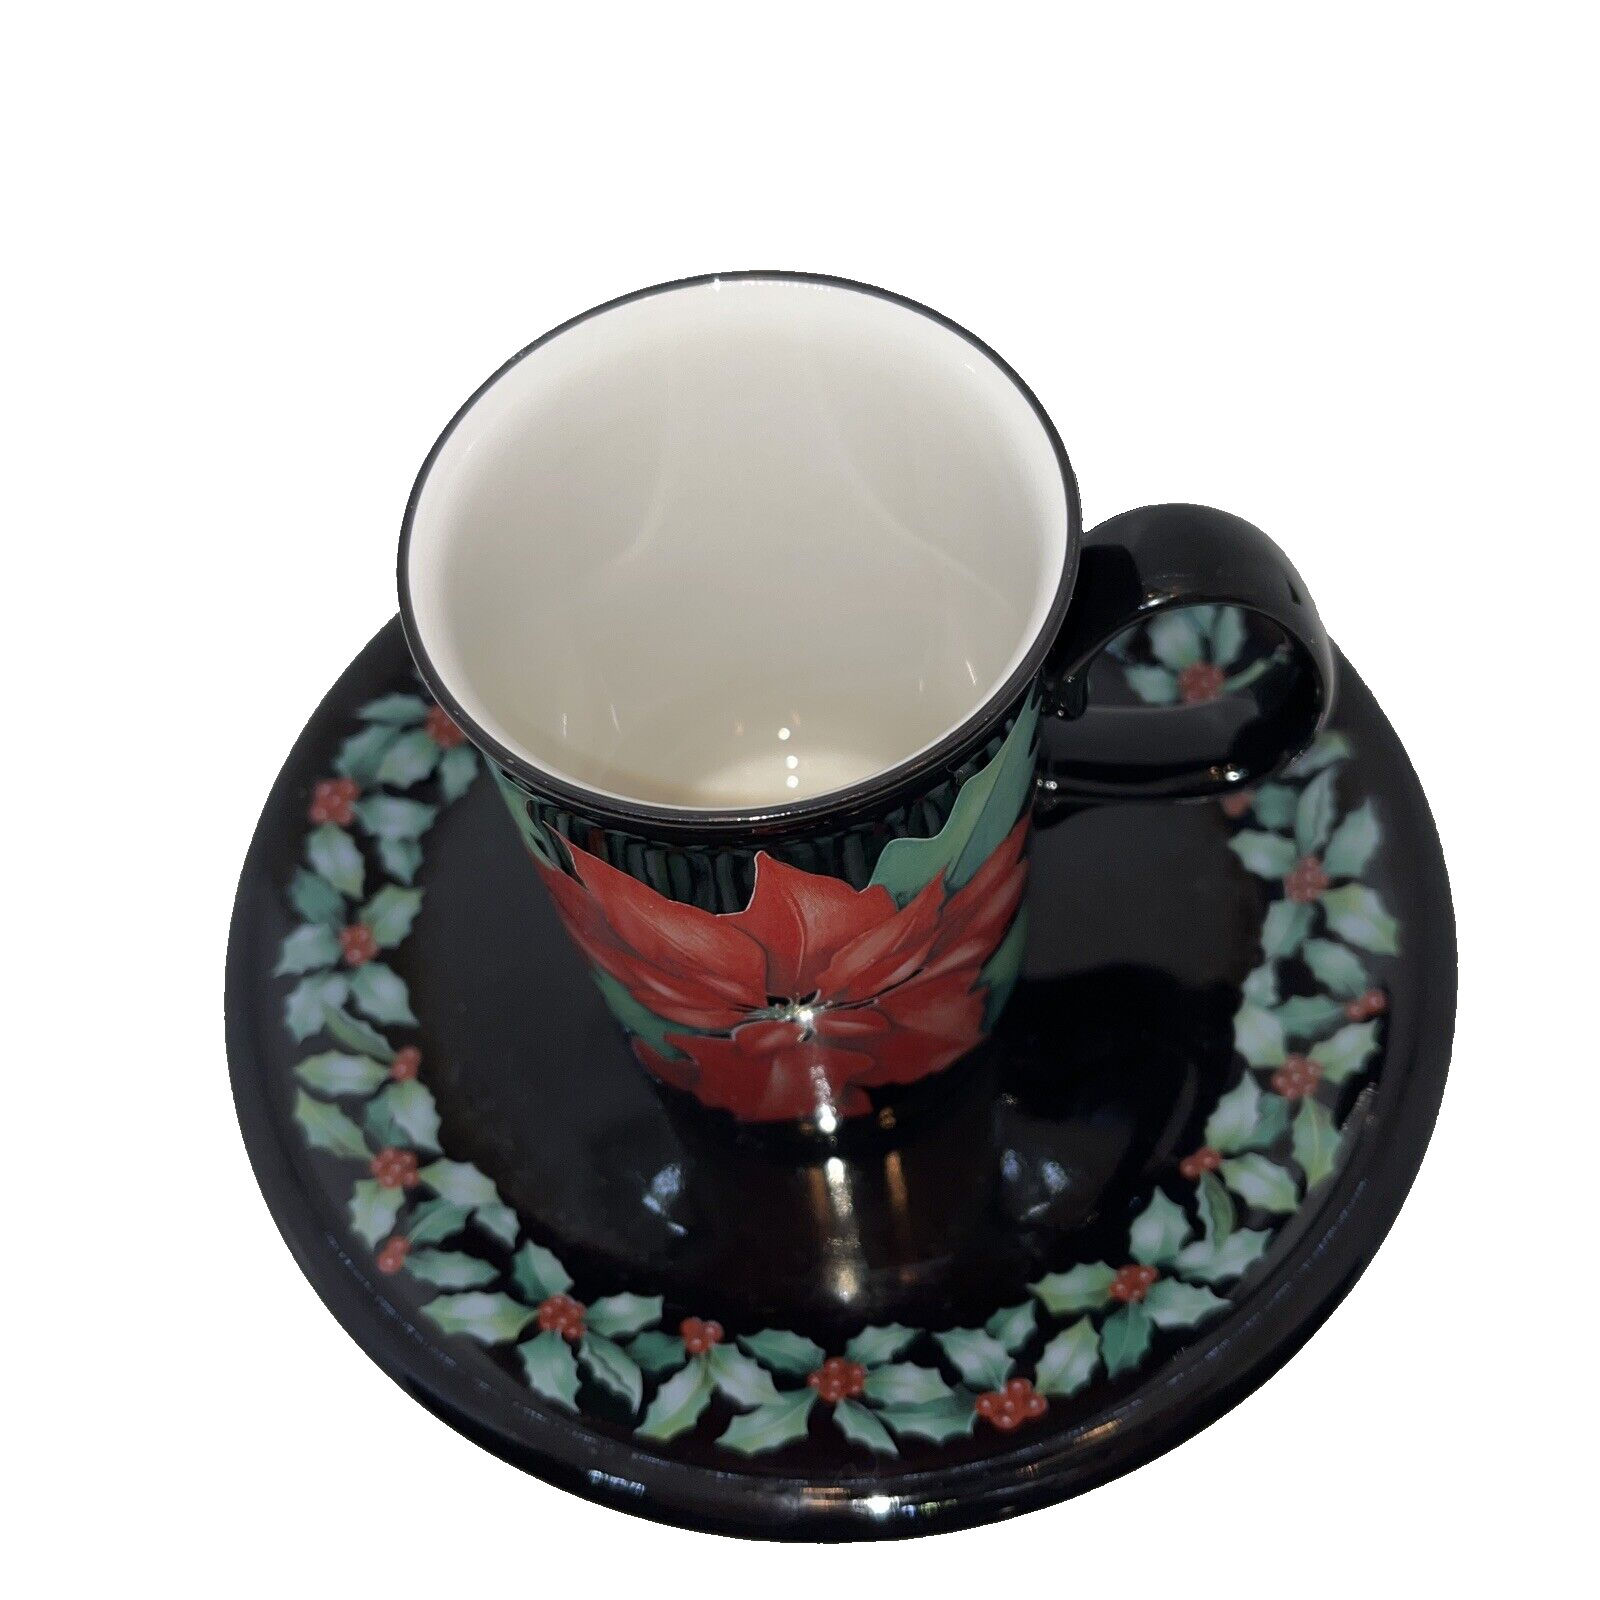 Dunoon Black Poinsettia Teacup & Saucer Set Stoneware Carolyn Bessy Scottland